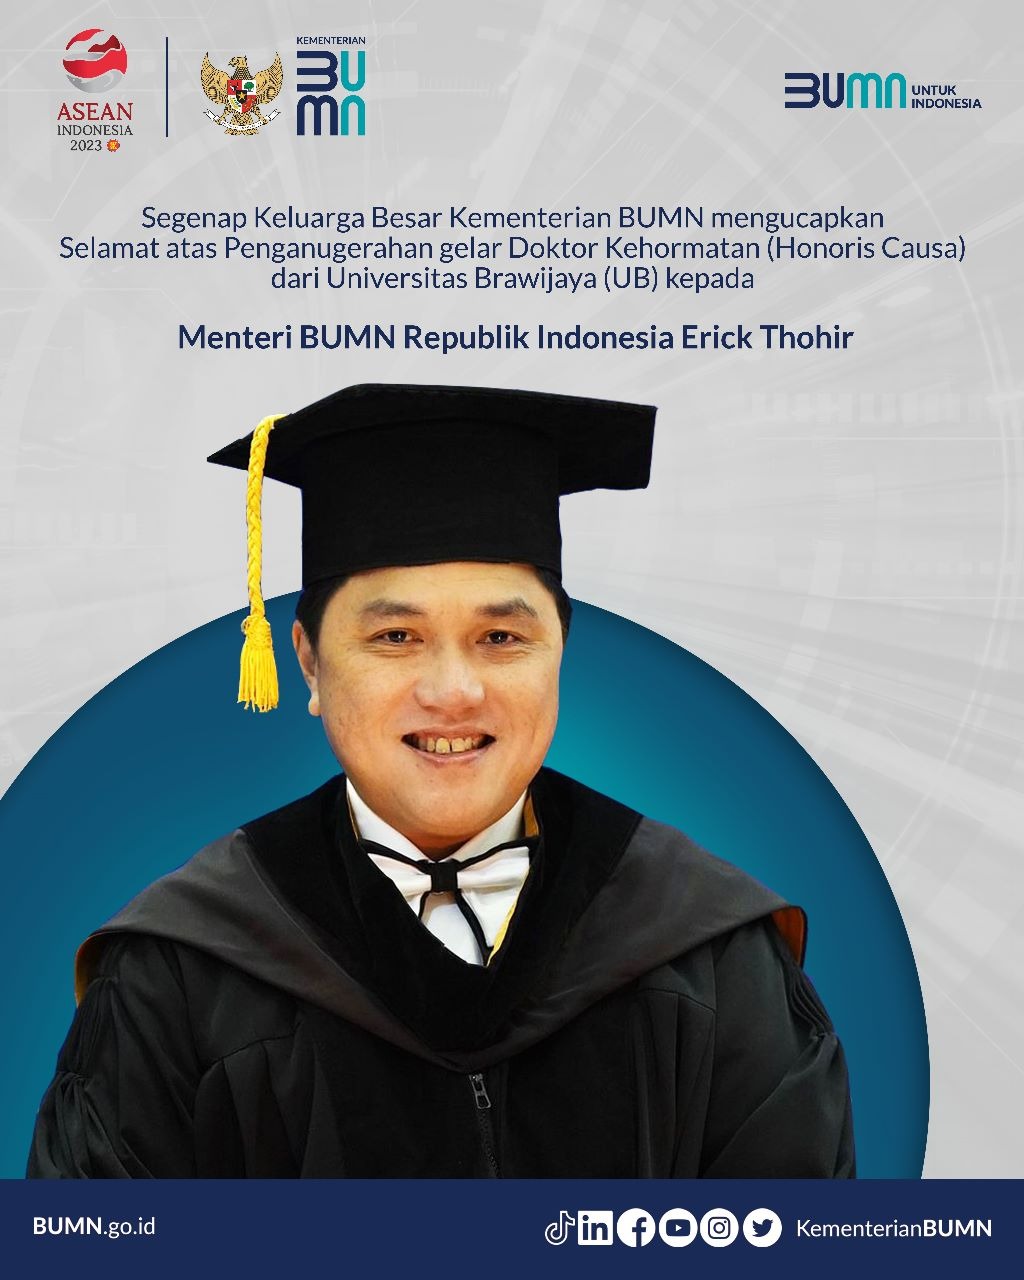 Penganugerahaan gelar Doktor Kehormatan (Honoris Causa) dari Universitas Brawijaya kepada Menteri BUMN